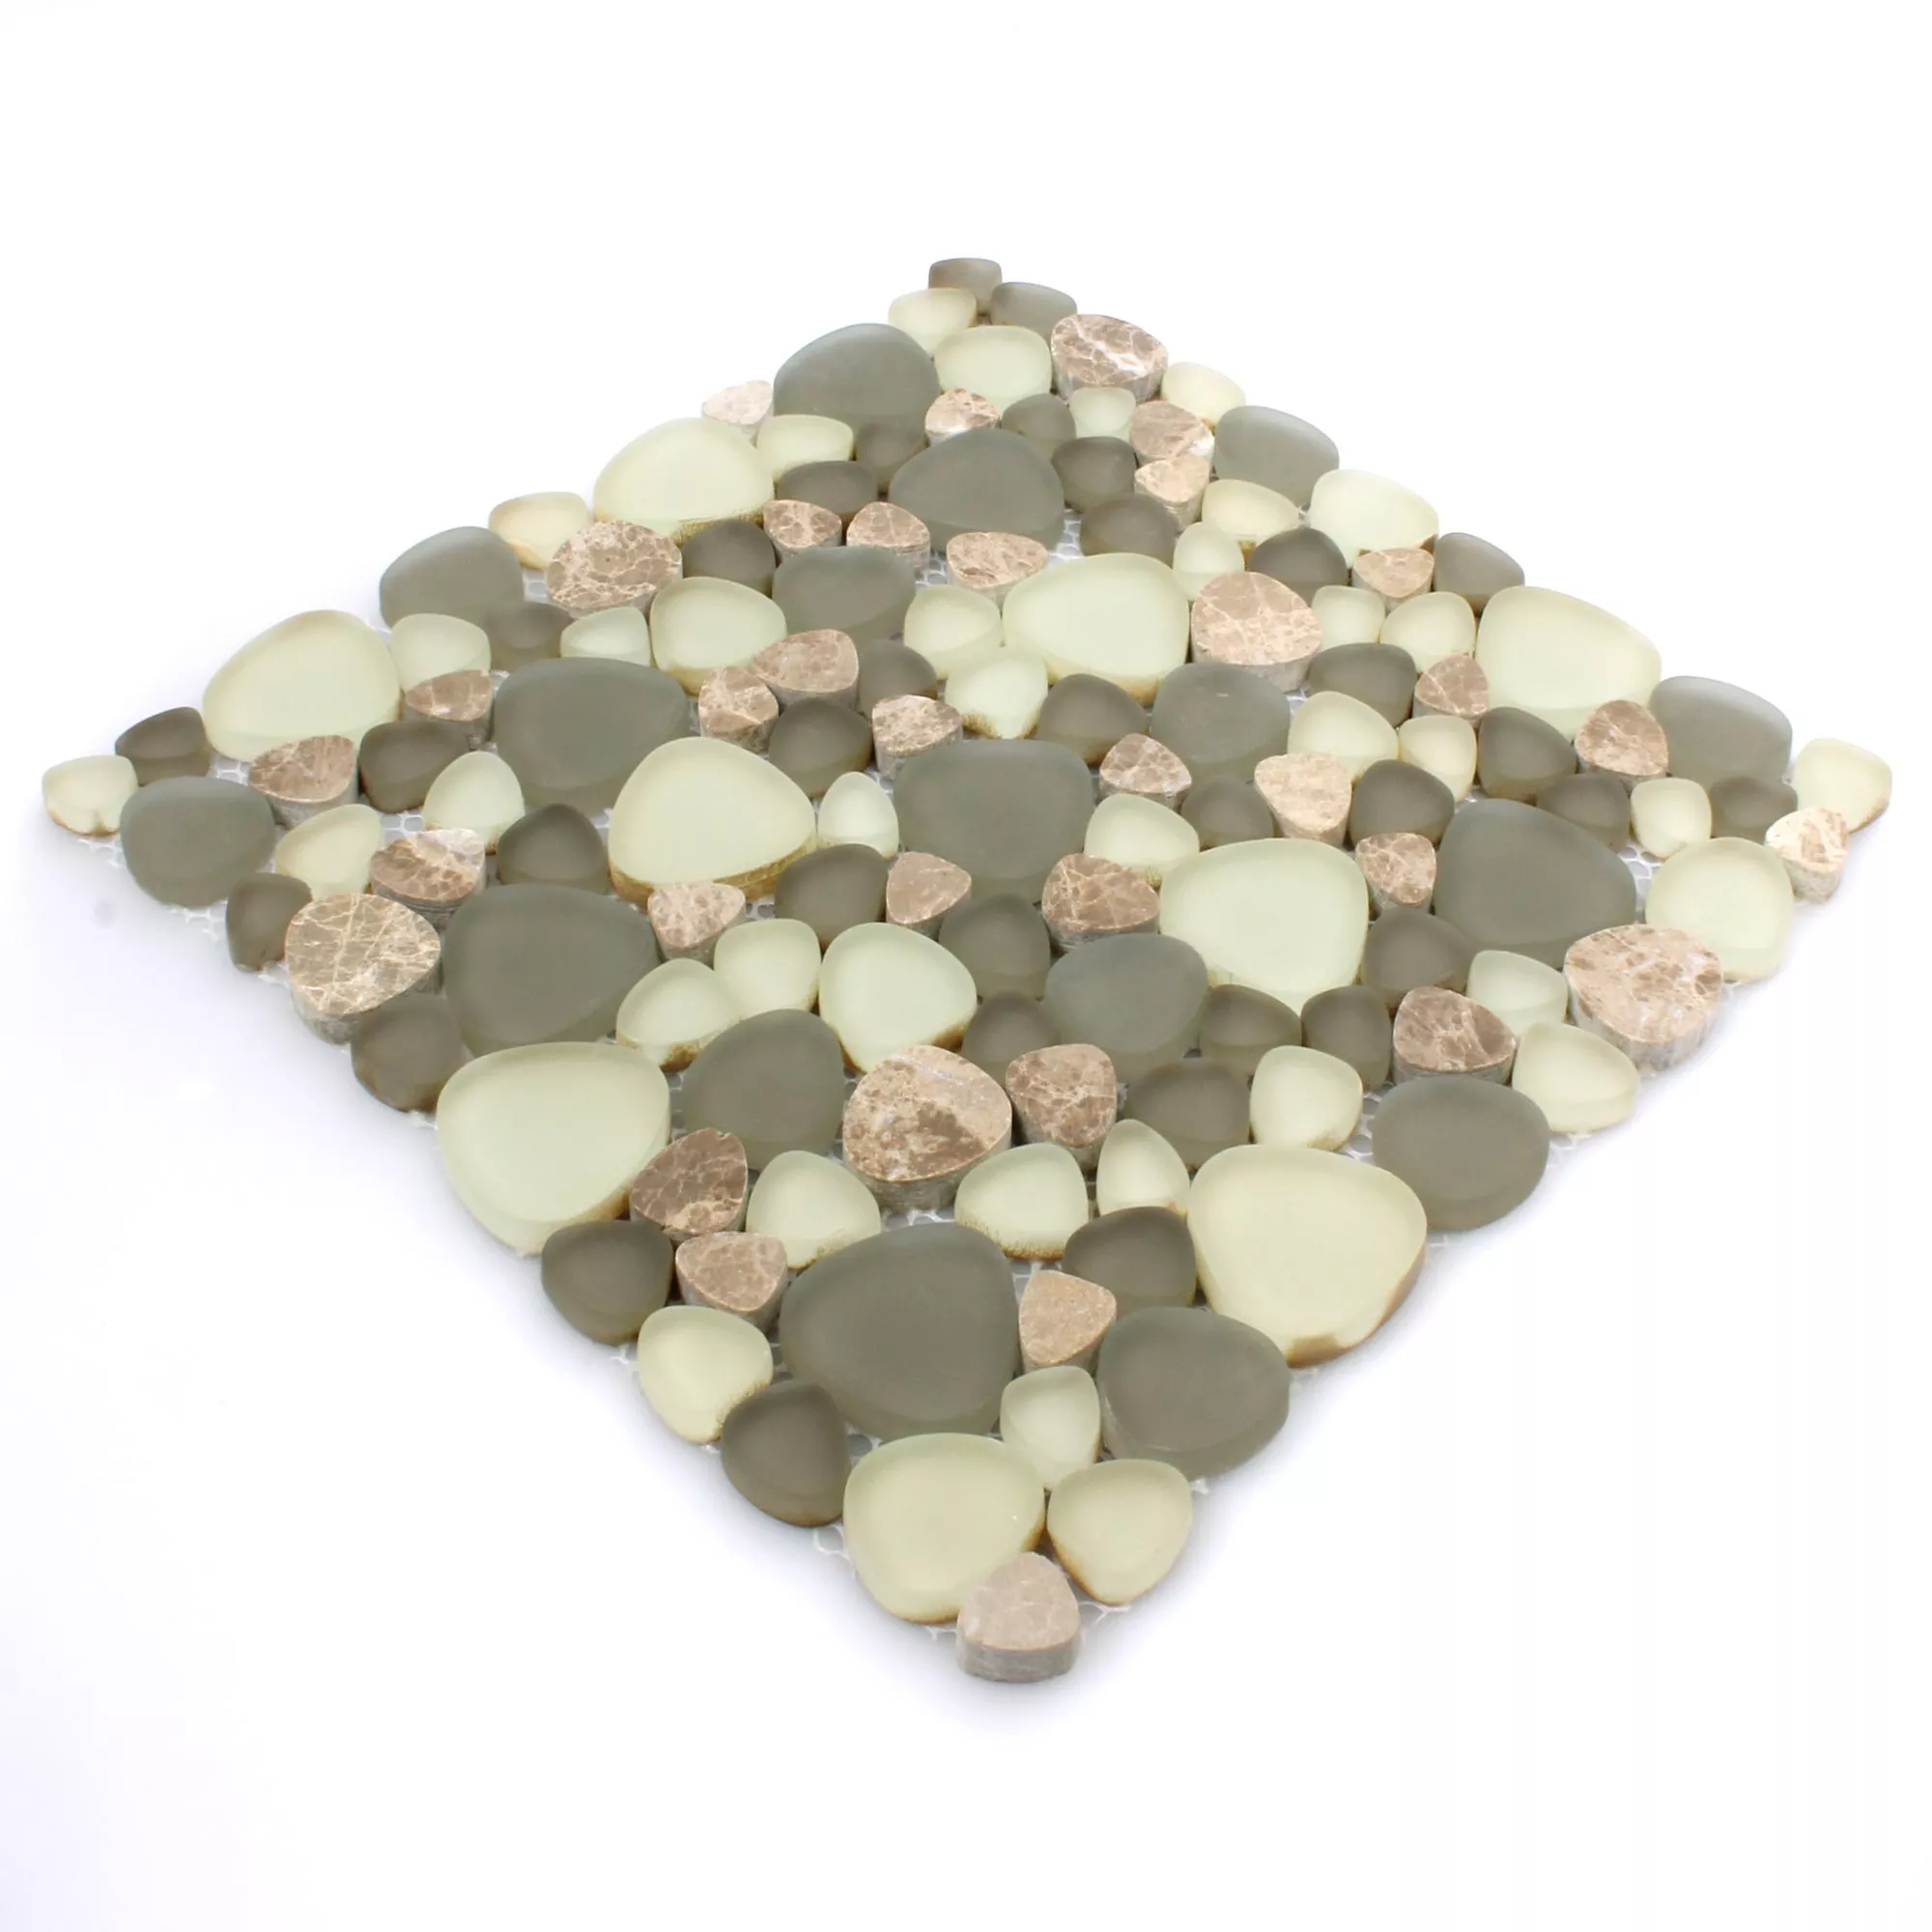 Sample Glass Natural Stone Mosaic Tiles Kiew Brown Beige